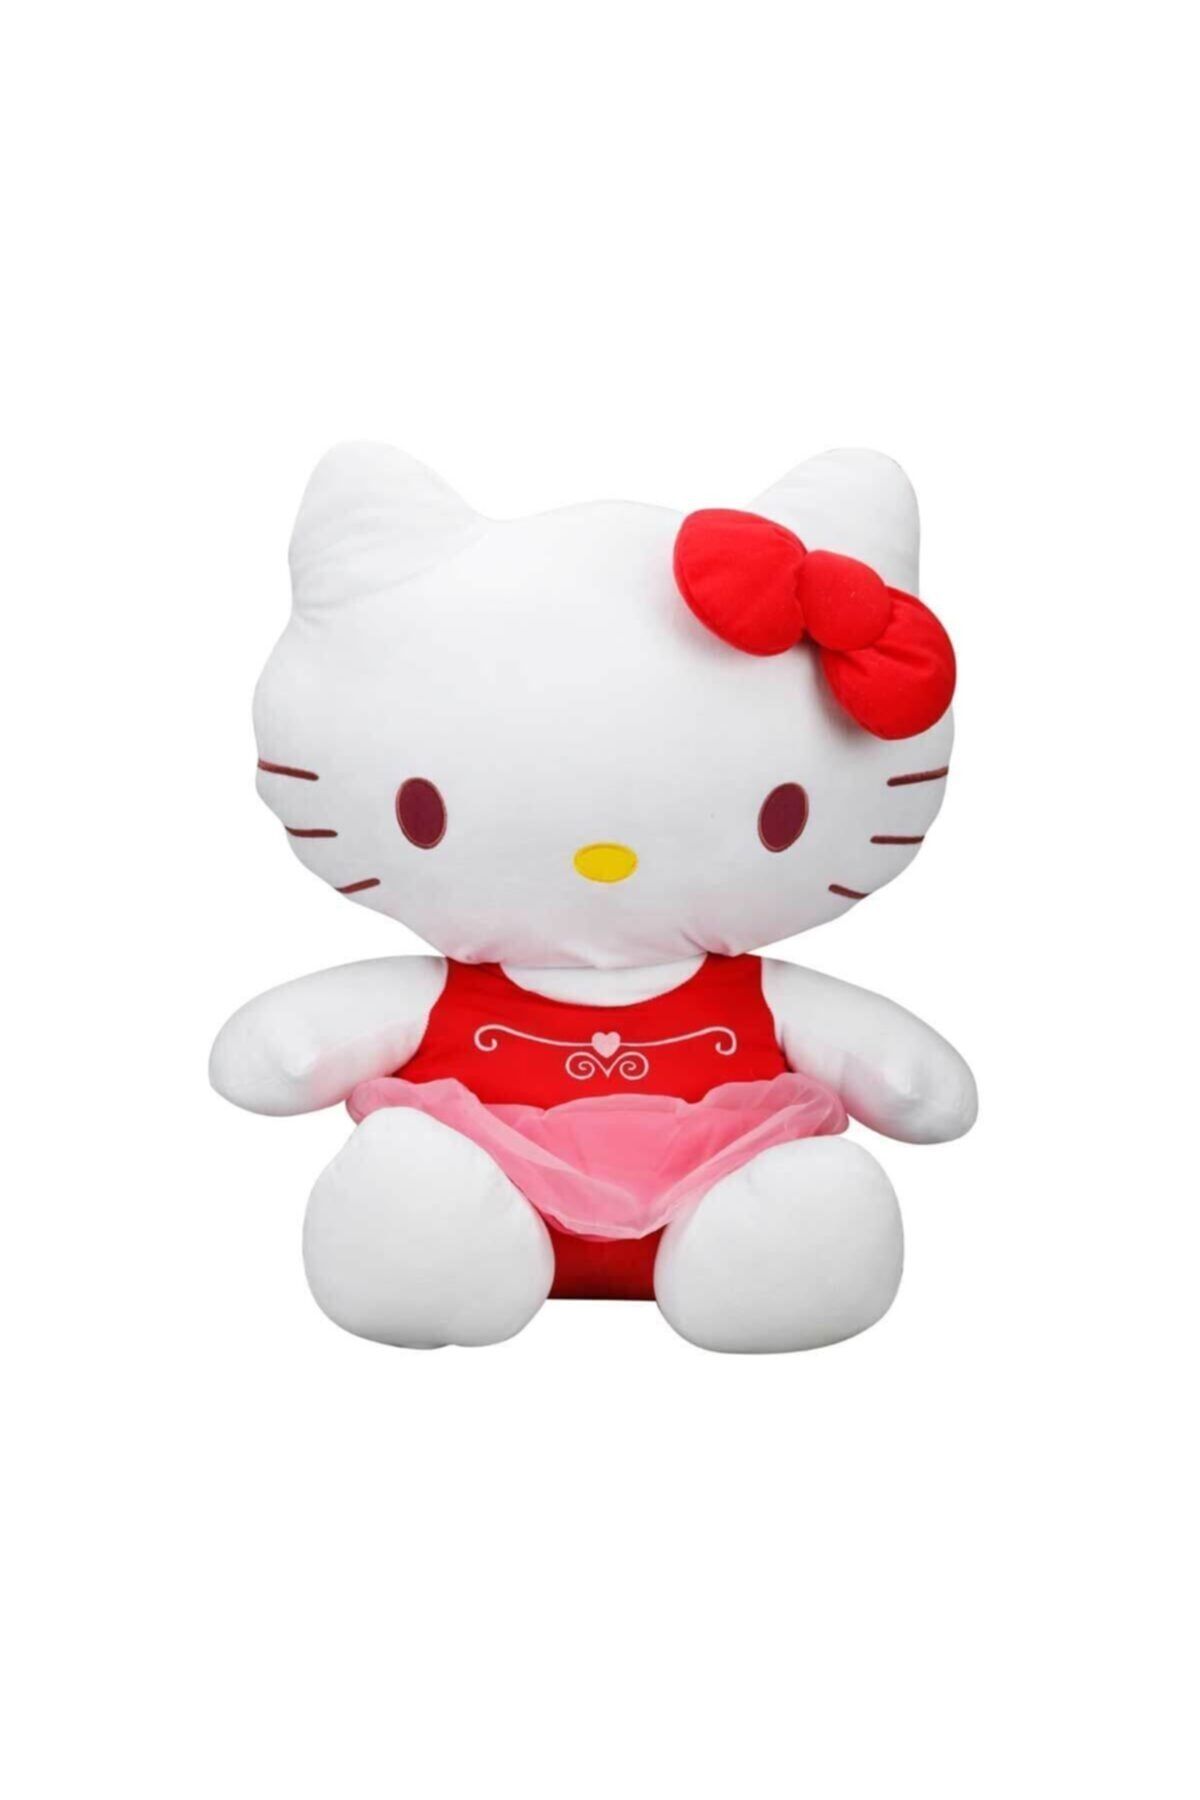 Sunman Peluş Hello Kitty Elbiseli Kurdeleli 70Cm